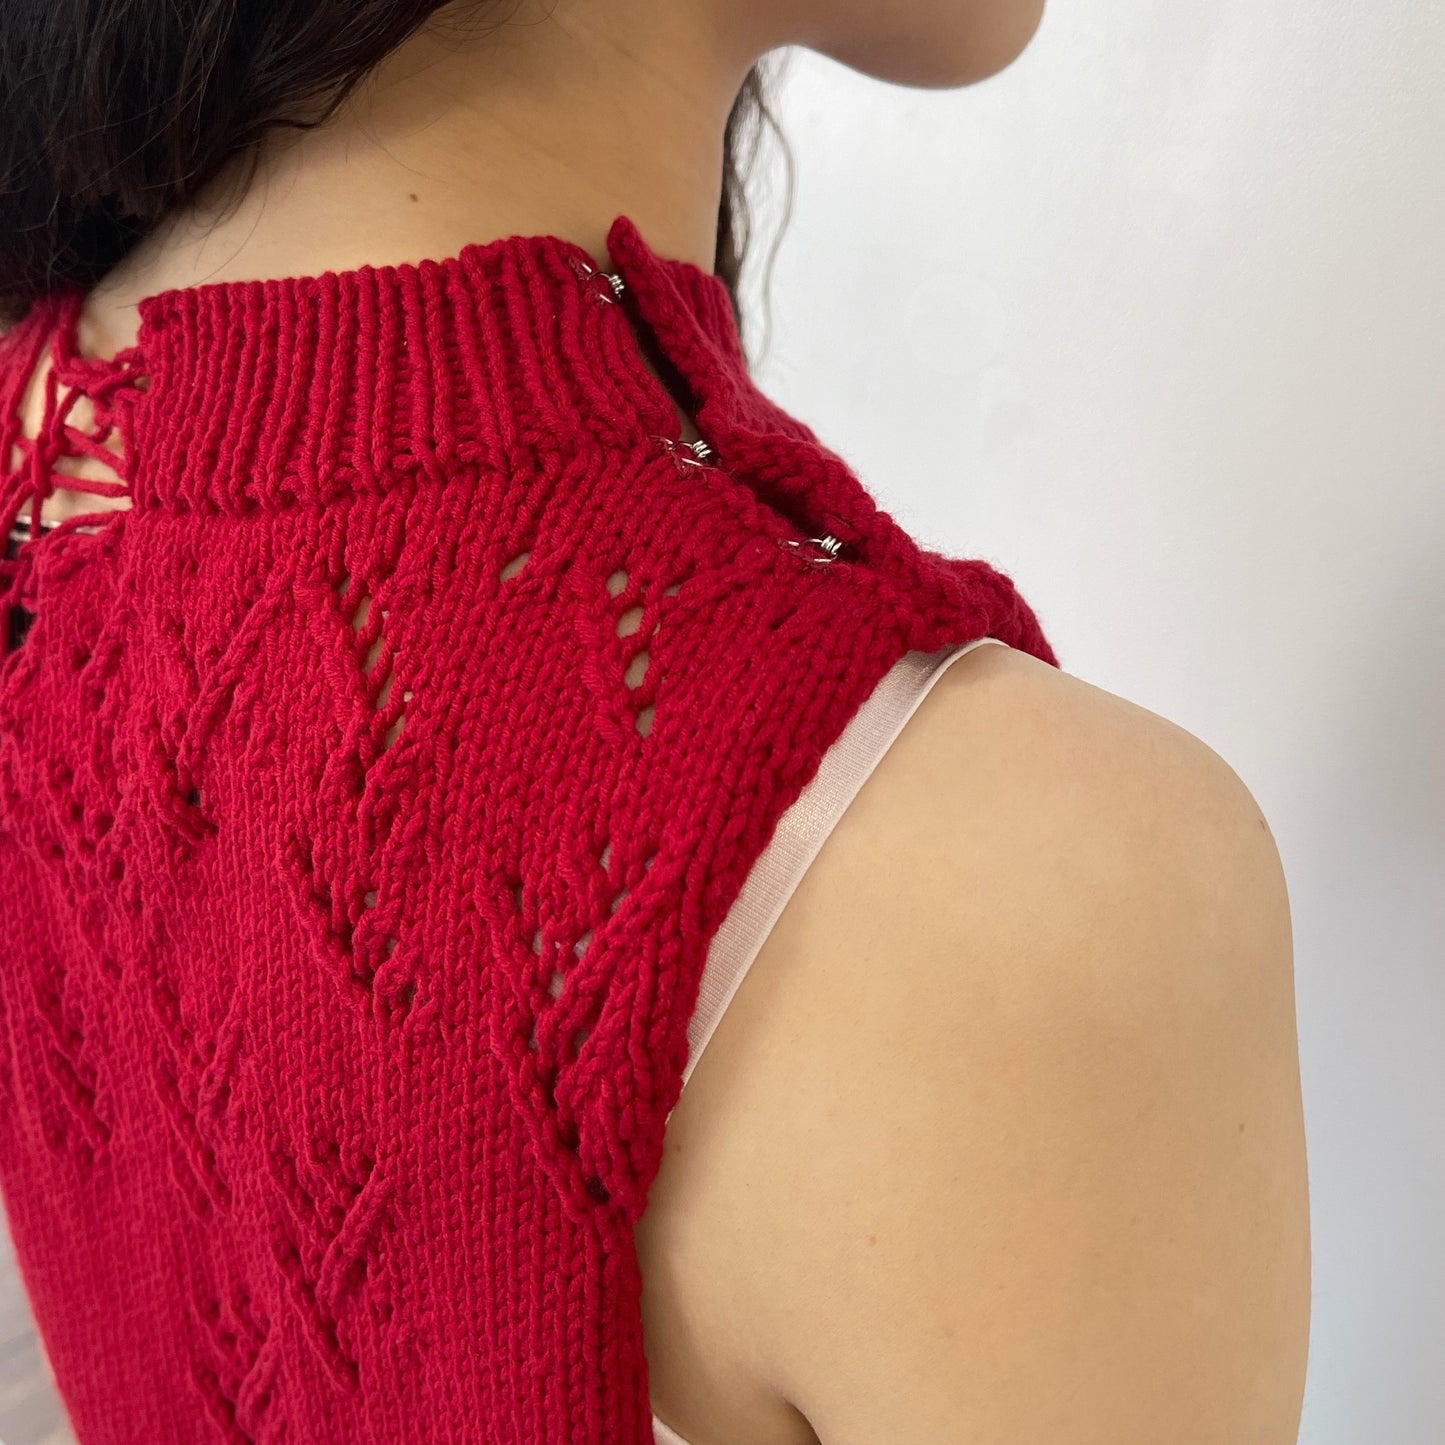 v neckline damage hand knit vest / red / ダメージハンドニットベスト